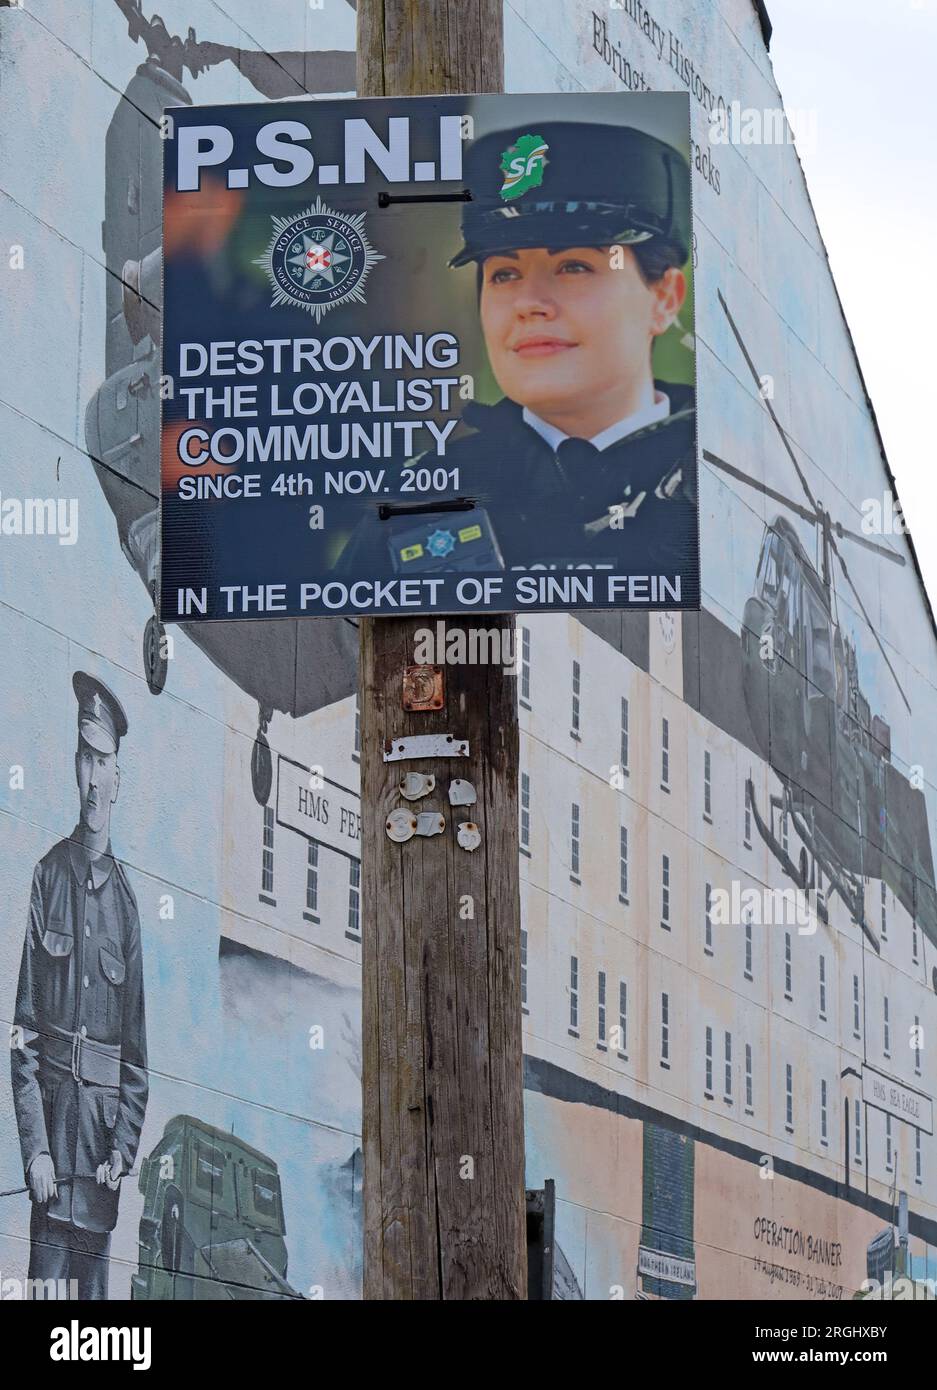 PSNI in the pocket of Sinn Fein, Destroying the Loyalist Community, sign in Pine St,Ebrington district of Londonderry, Northern Ireland, UK, ,BT47 6EJ Stock Photo